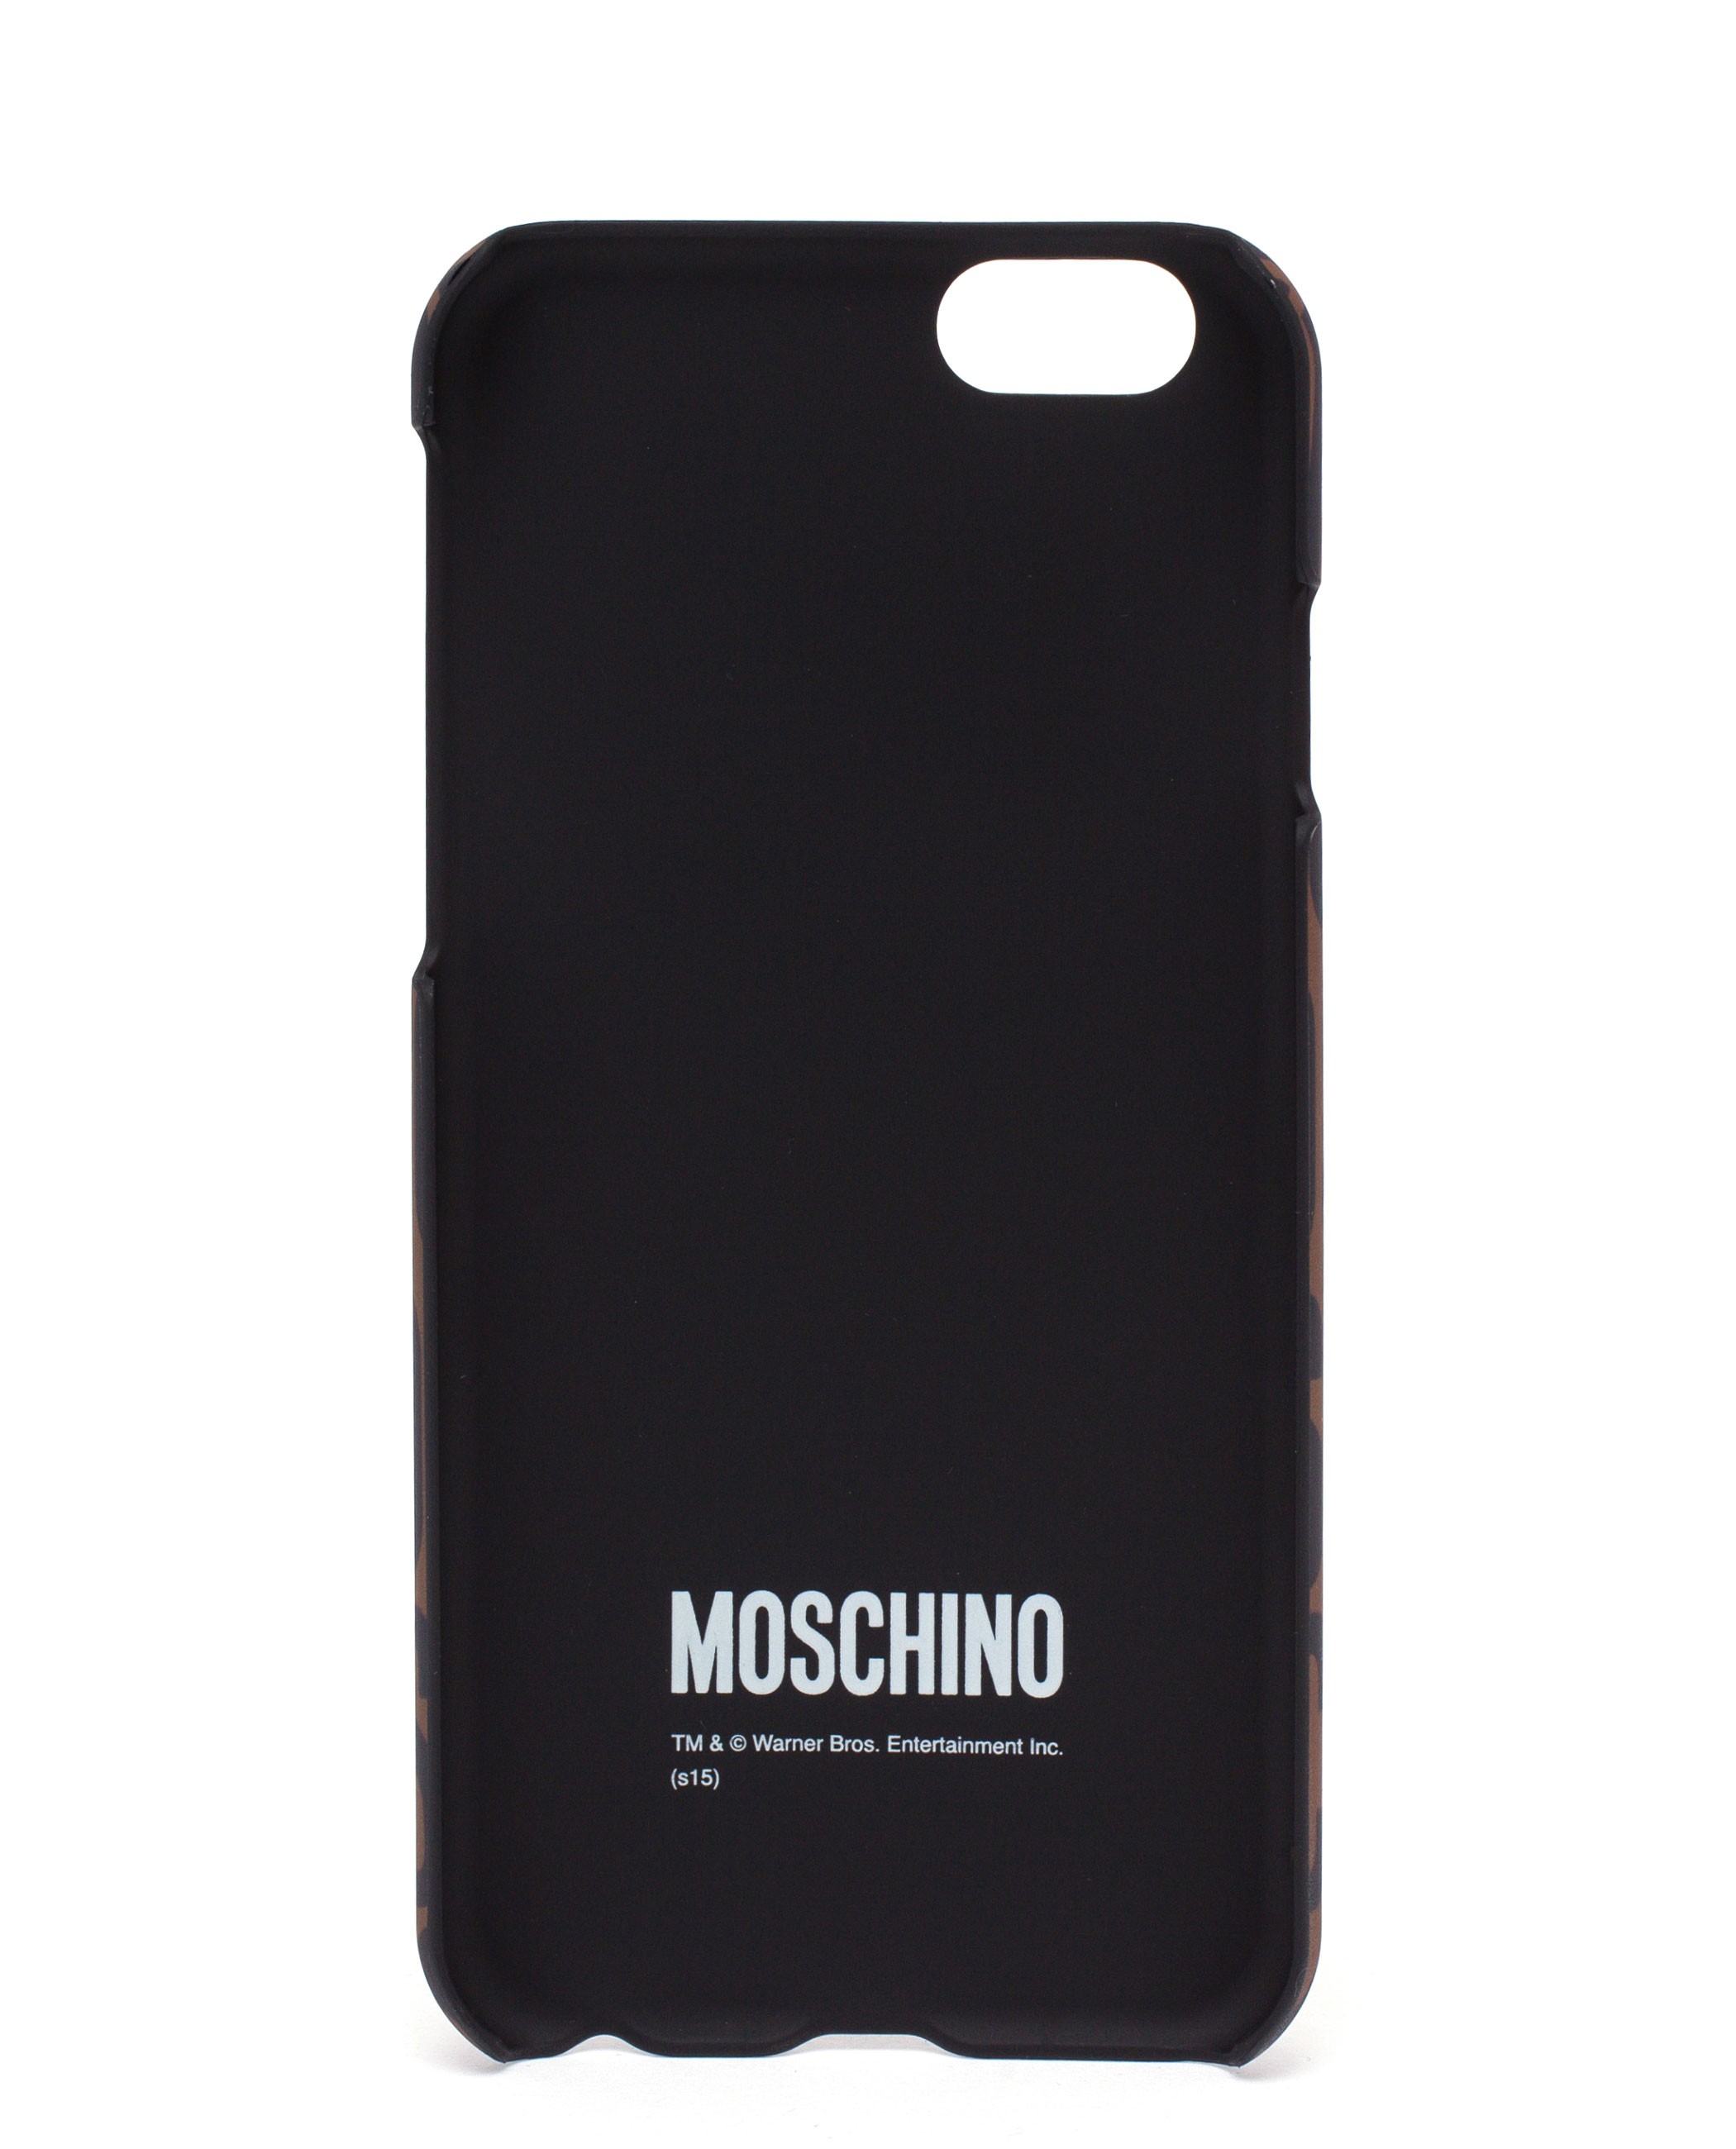 moschino iphone 6s case